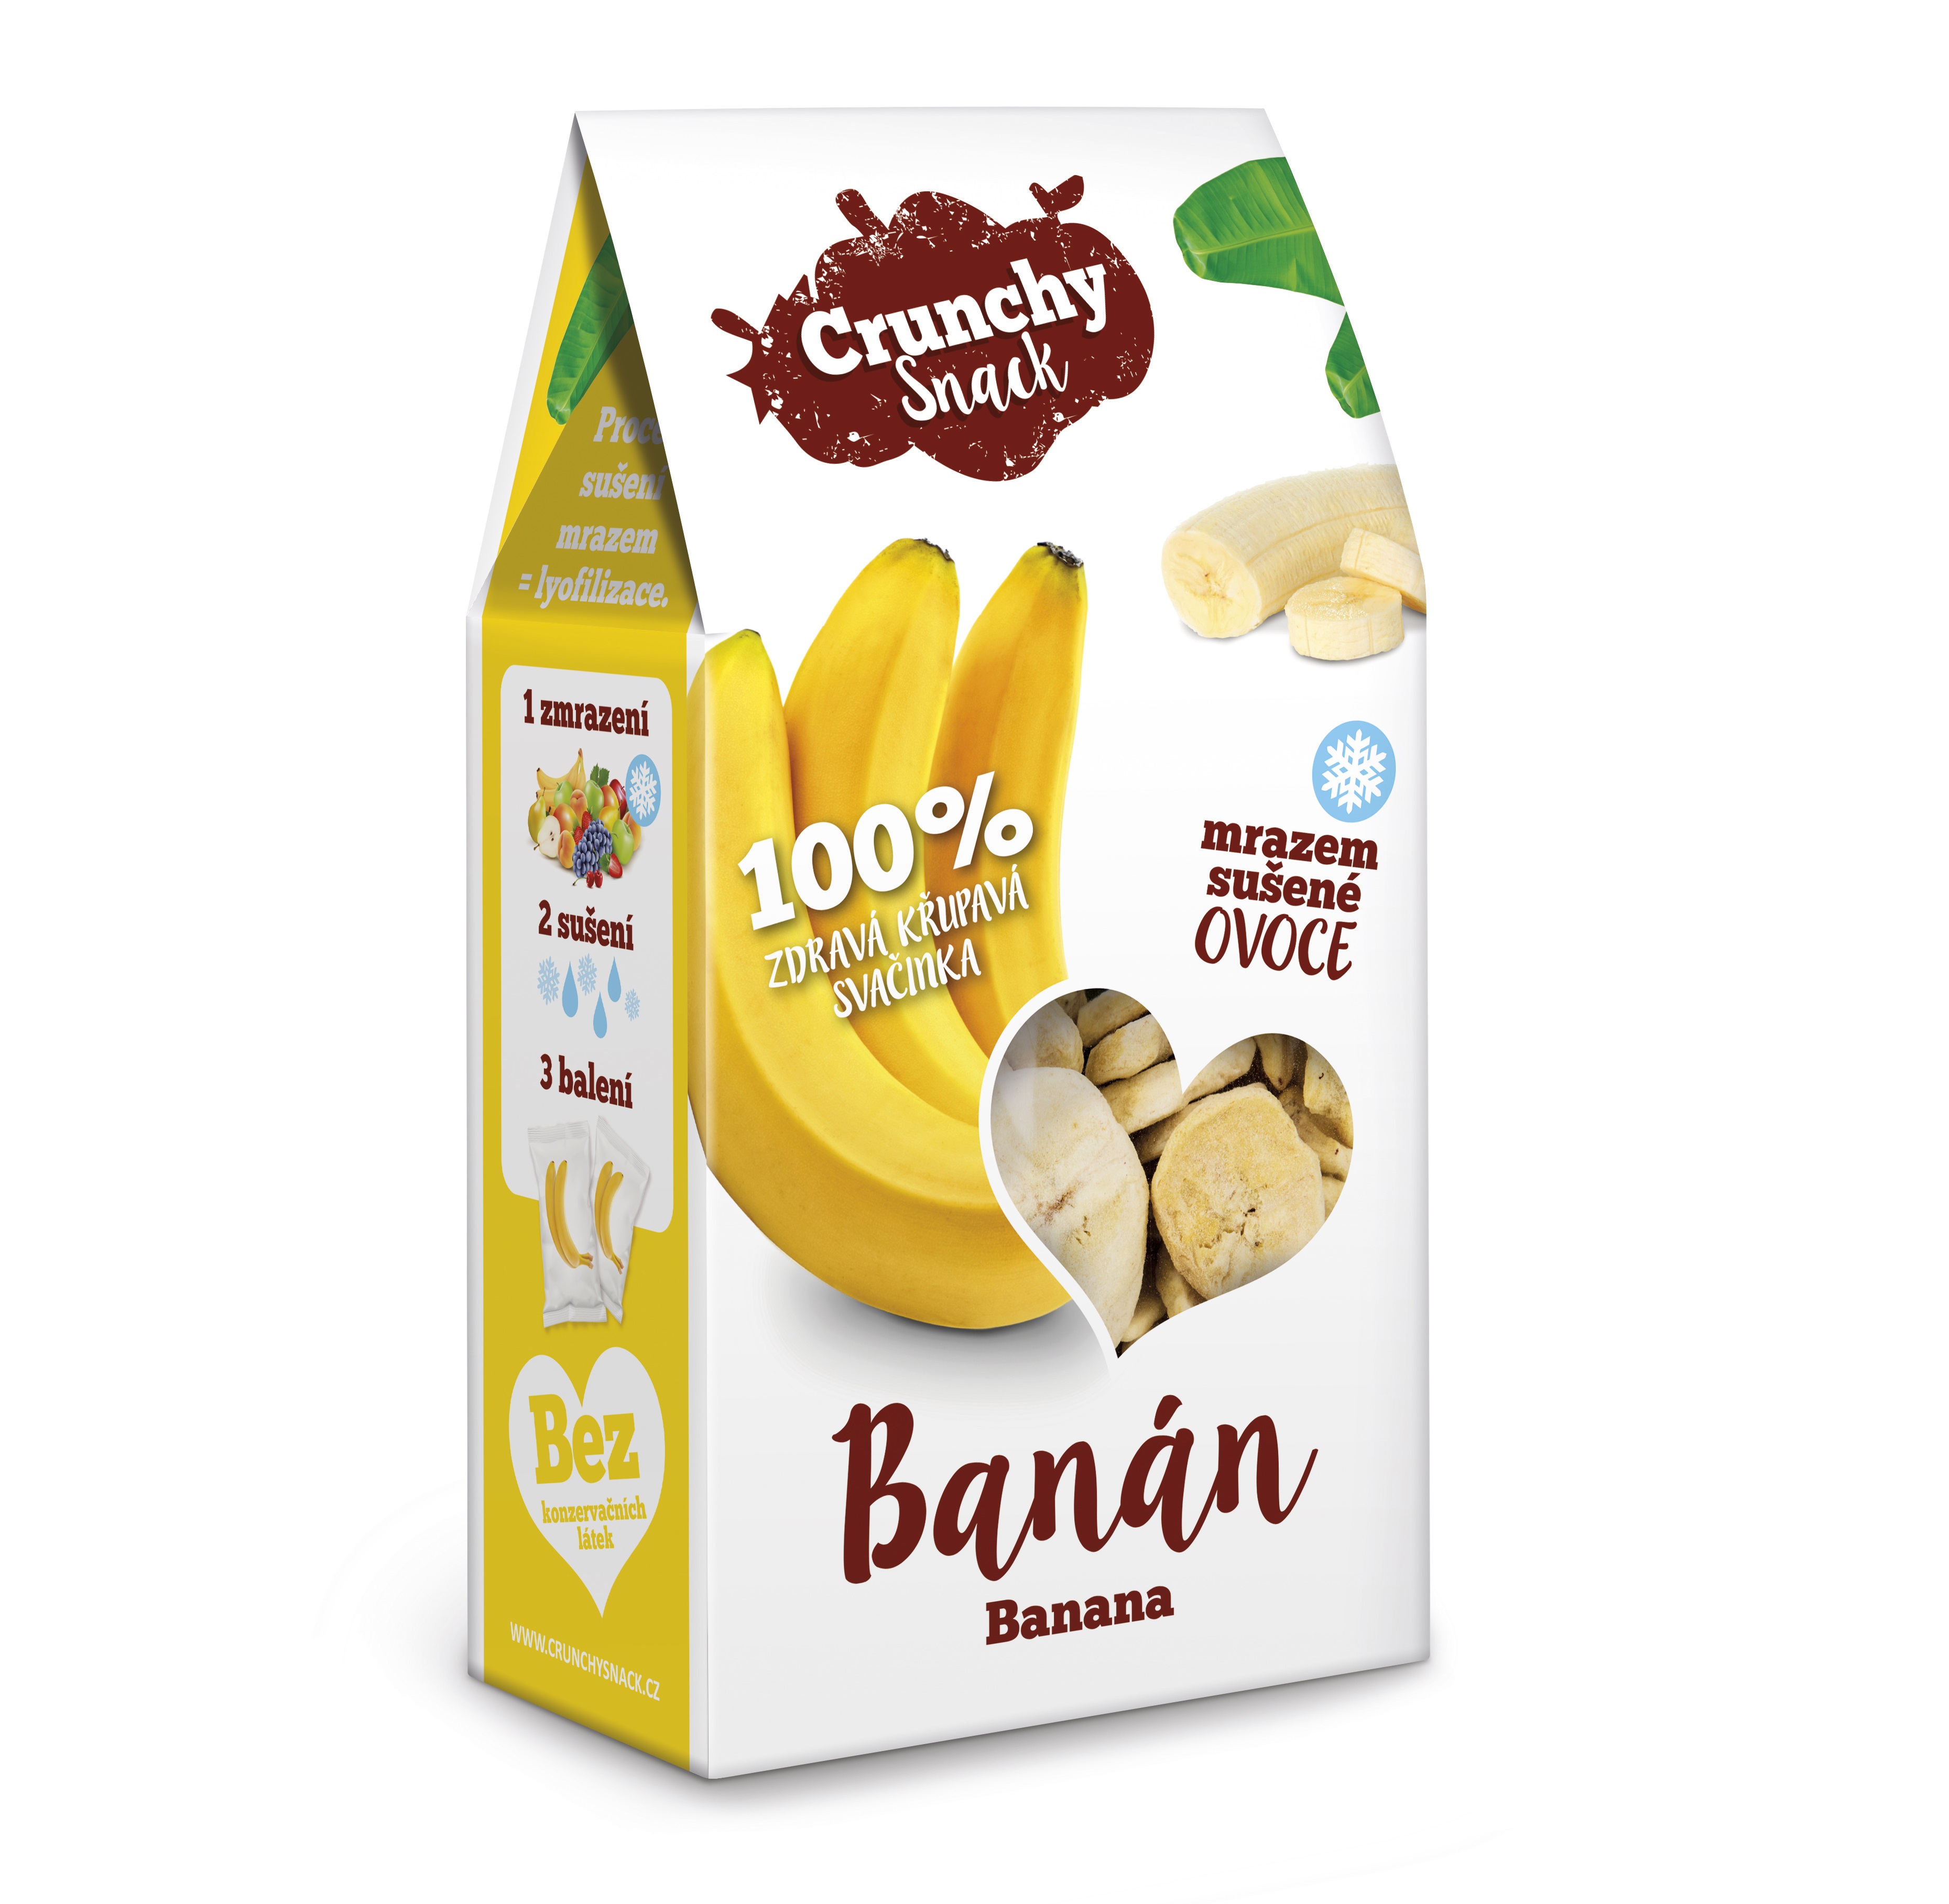 Crunchy snack Bananct